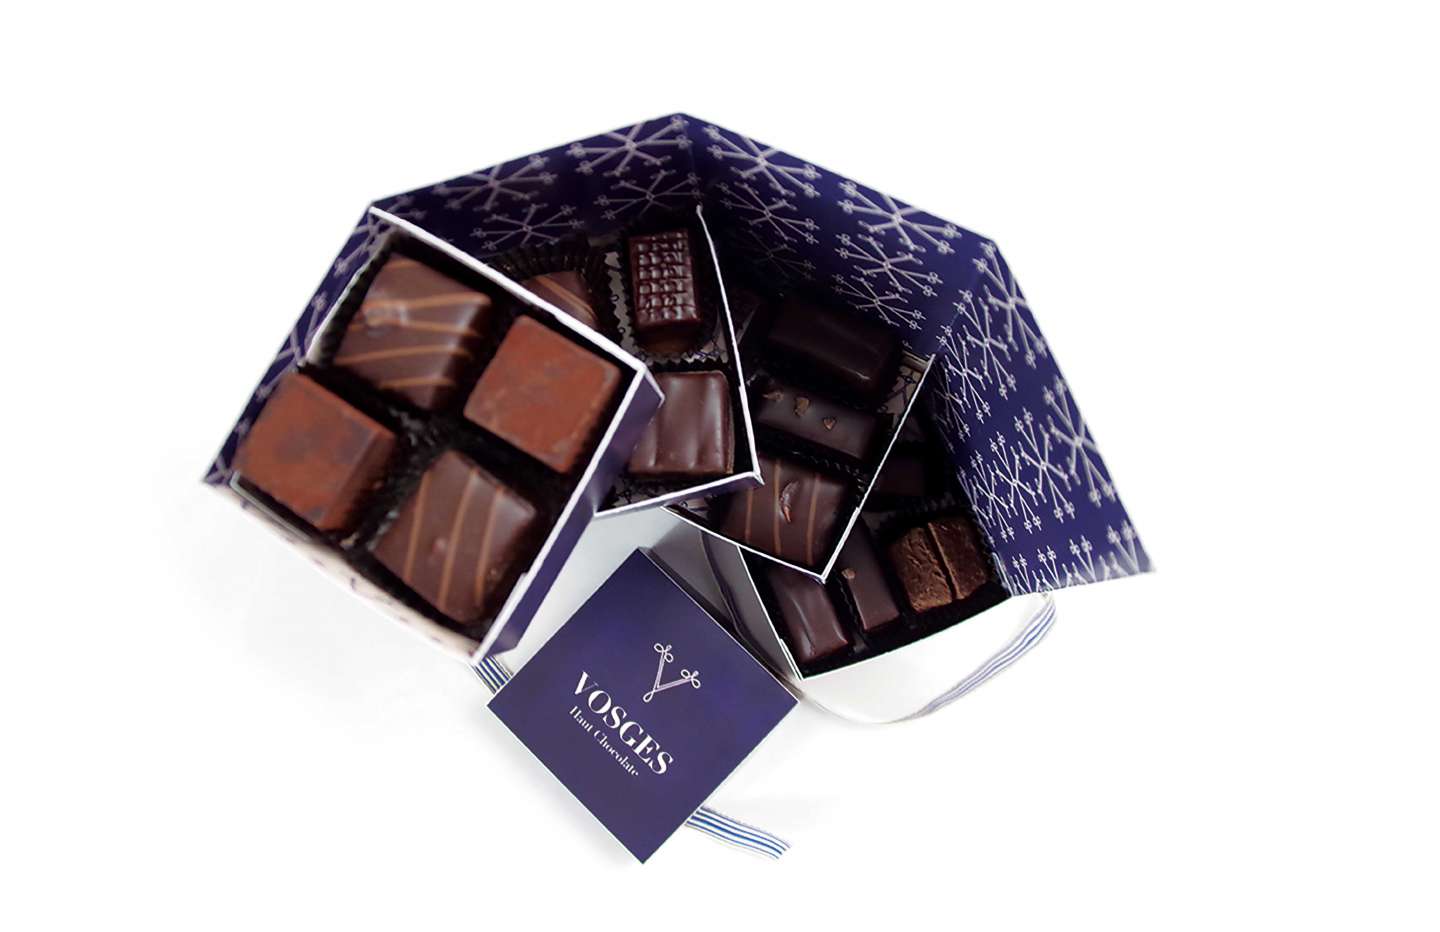 Vosges Haut Chocolate Packaging